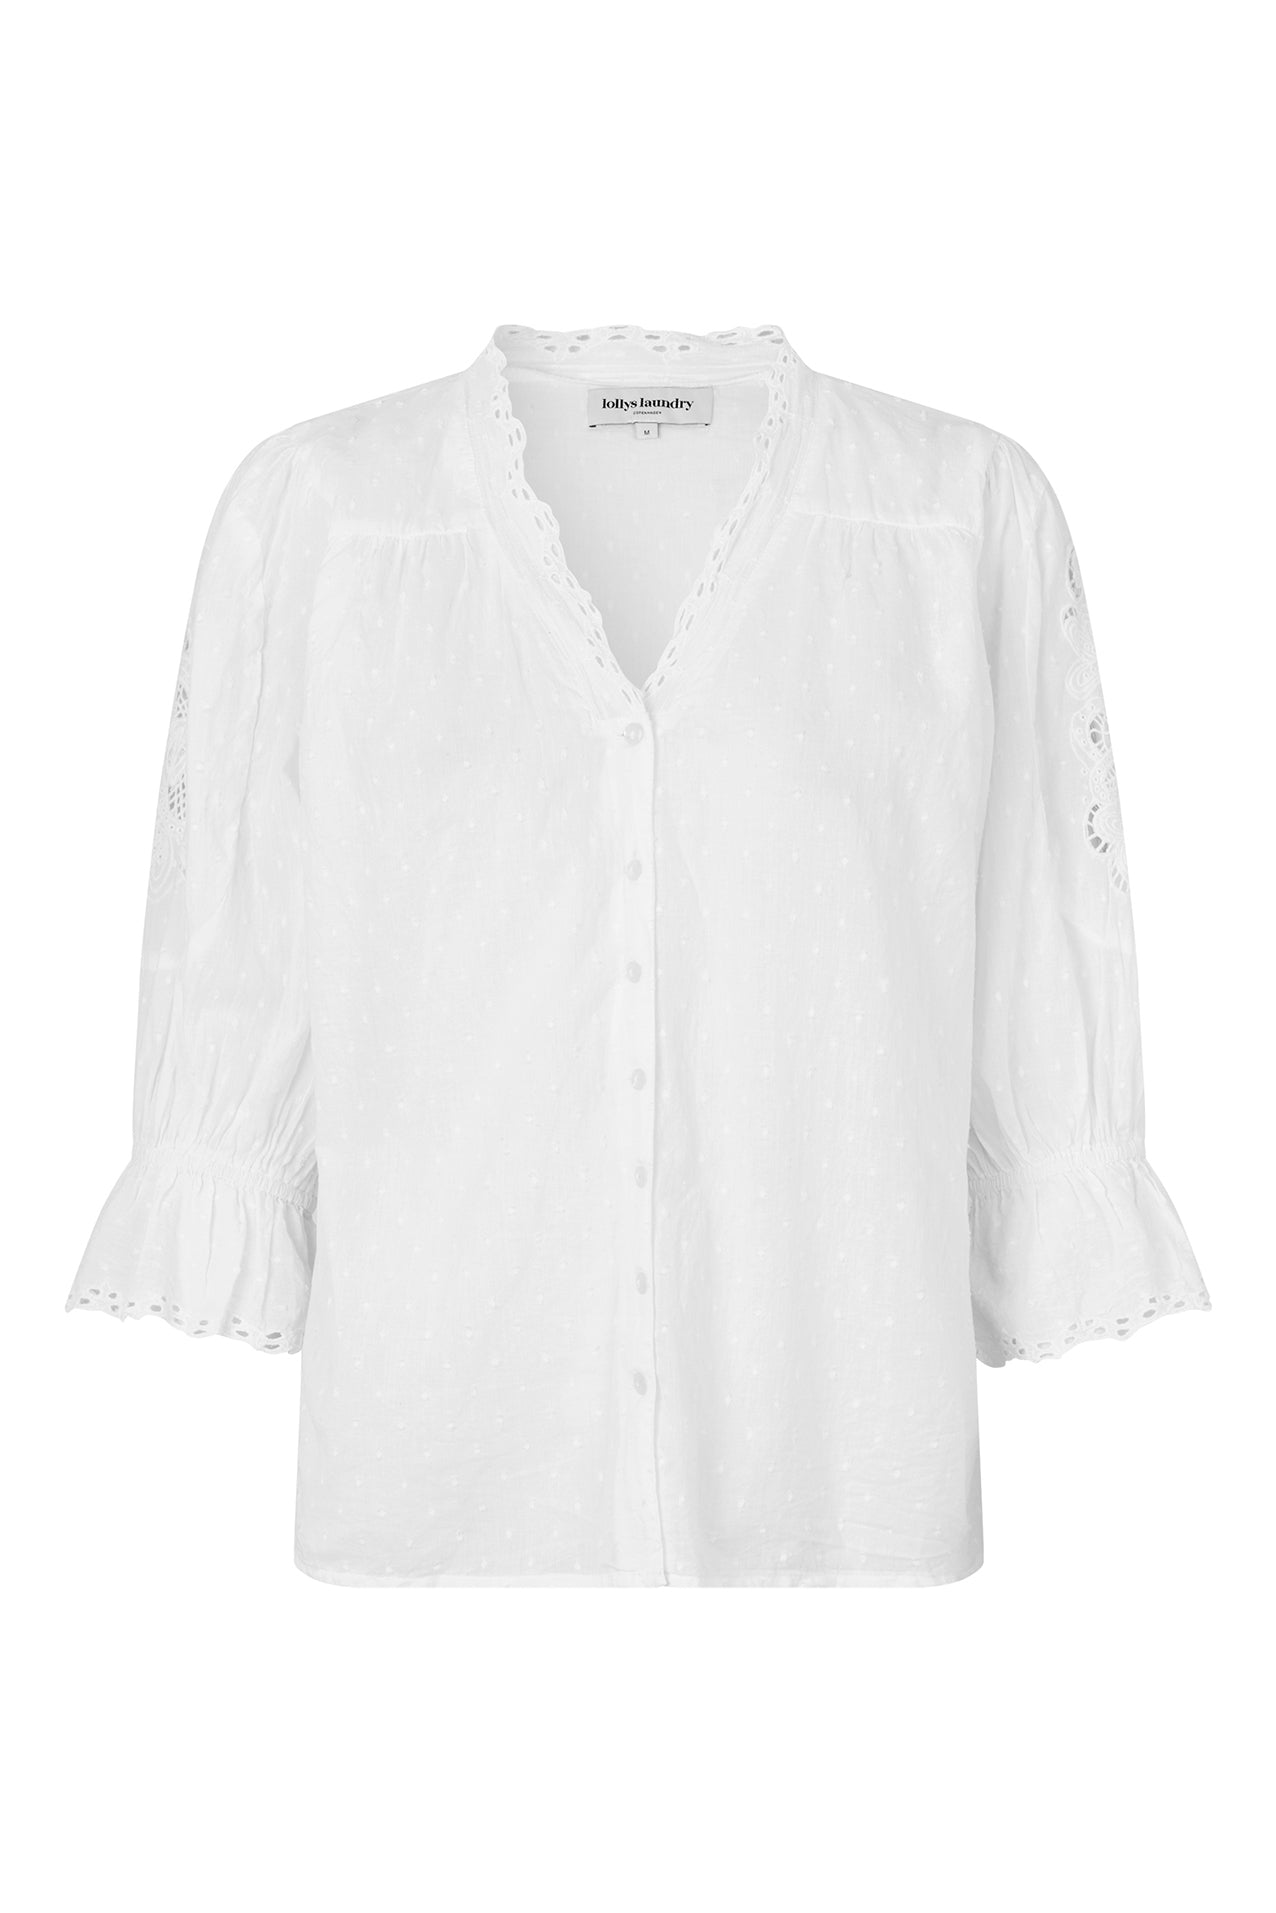 Lollys Laundry CharlieLL Shirt Shirt 01 White